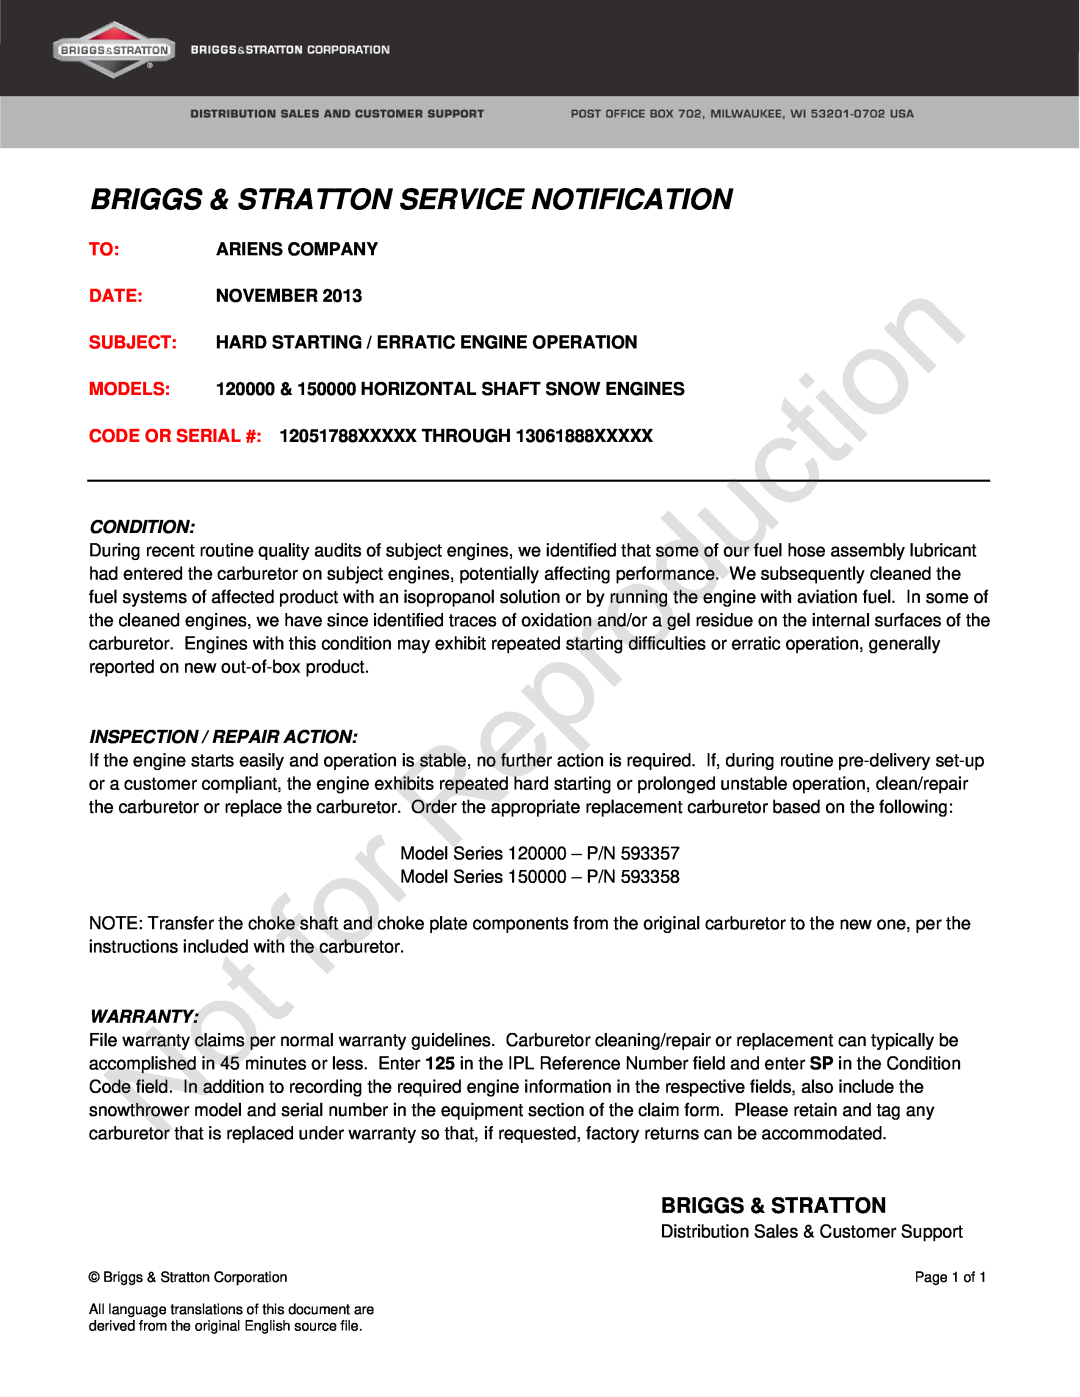 Ariens 120000 CODE OR SERIAL # 12051788XXXXX THROUGH, Briggs & Stratton Service Notification, Ariens Company, Date, Models 